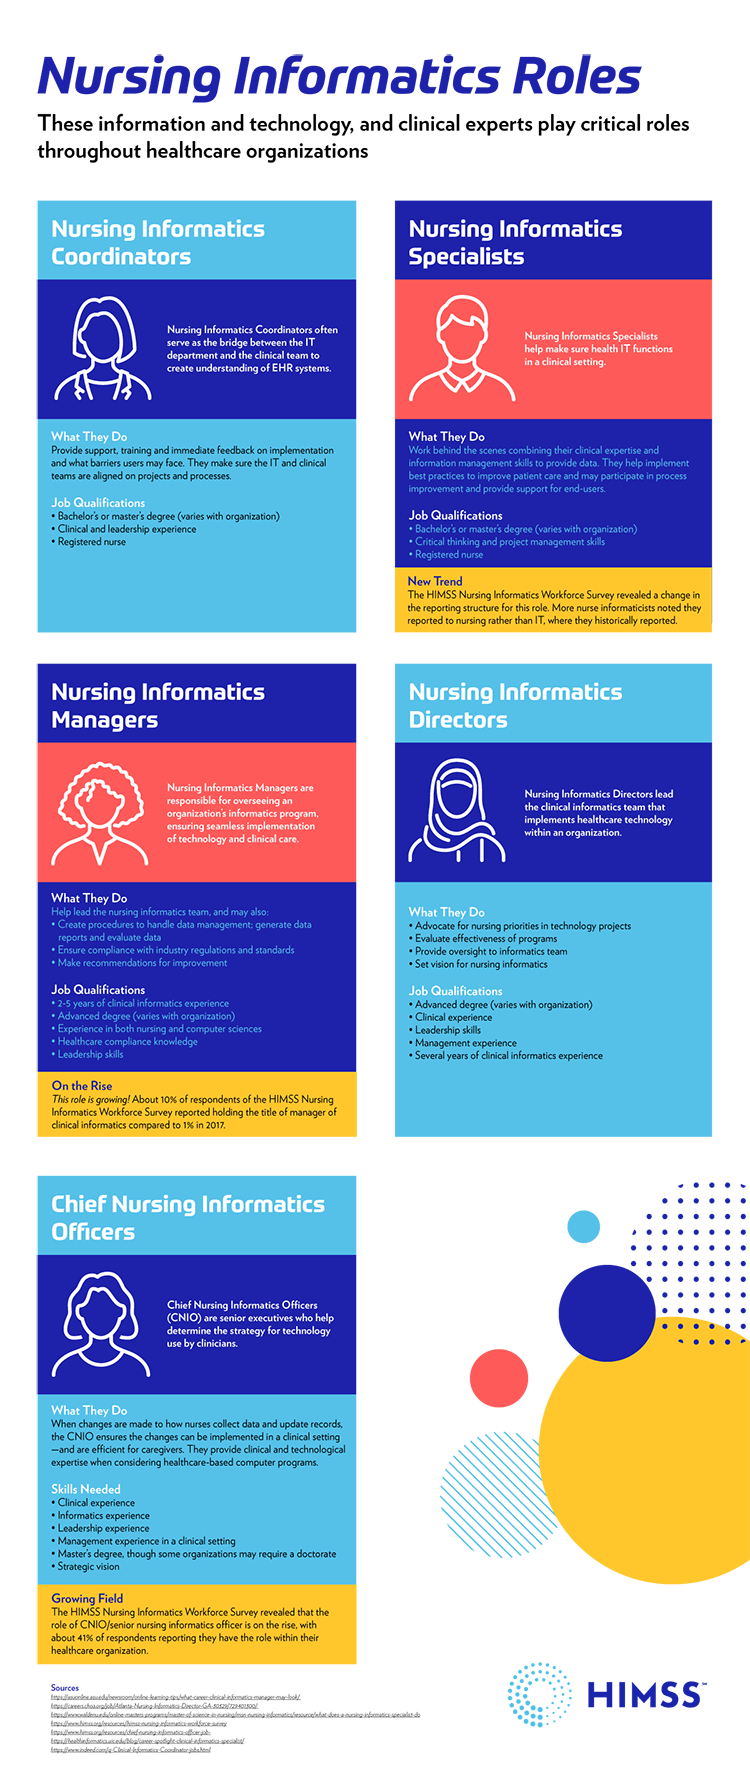 Infographic explaining key nursing informatics roles